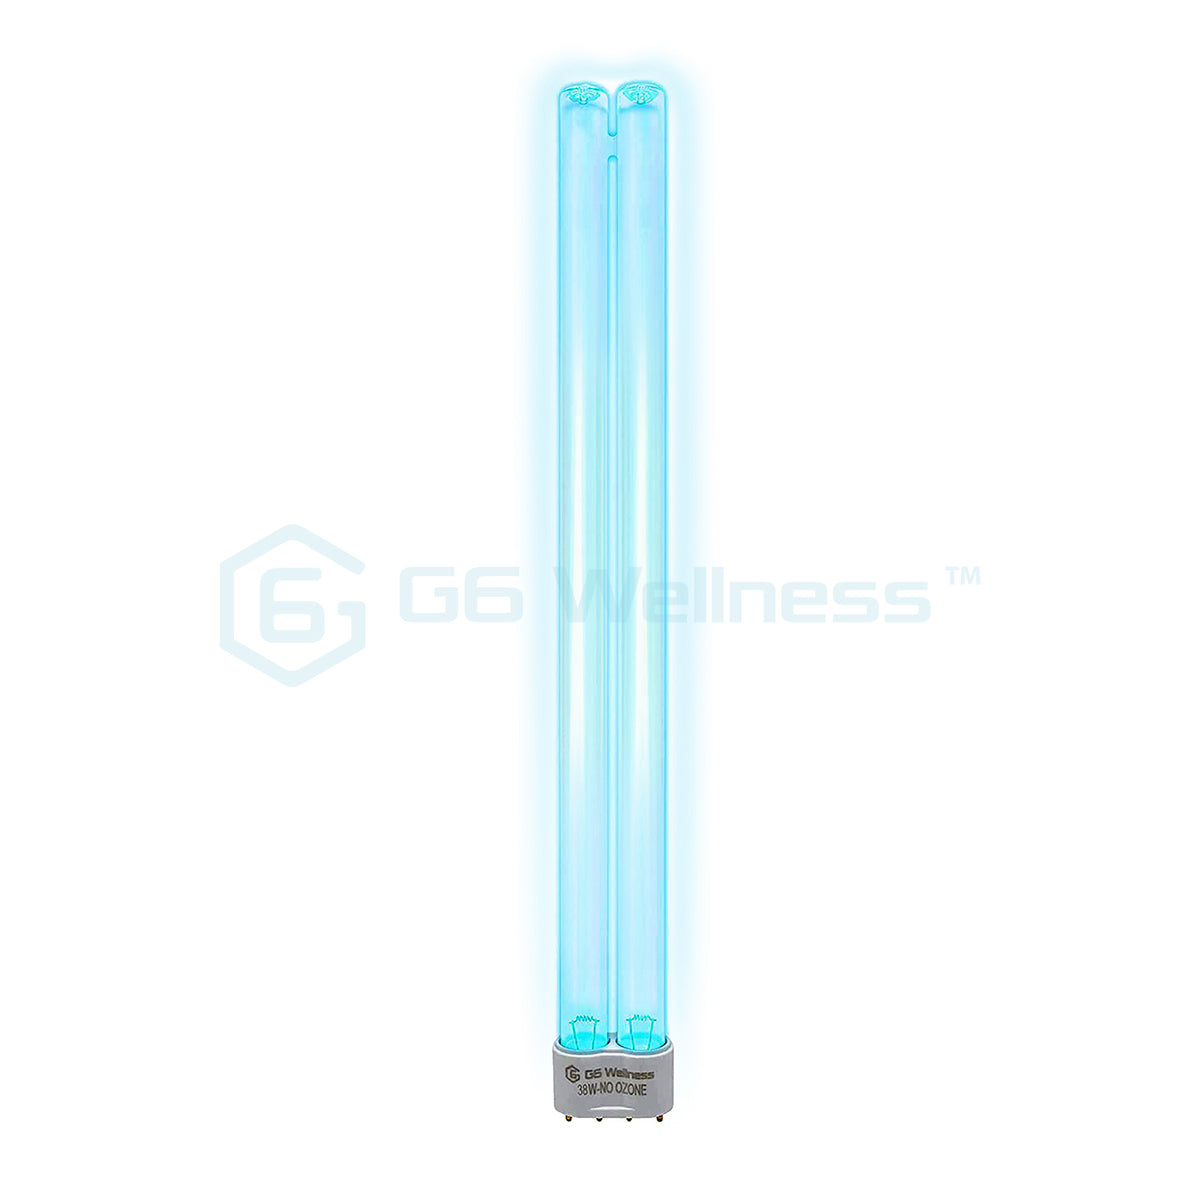 Buy [Lumiera] [CX111S] 36W UV light resin liquid 65g with high